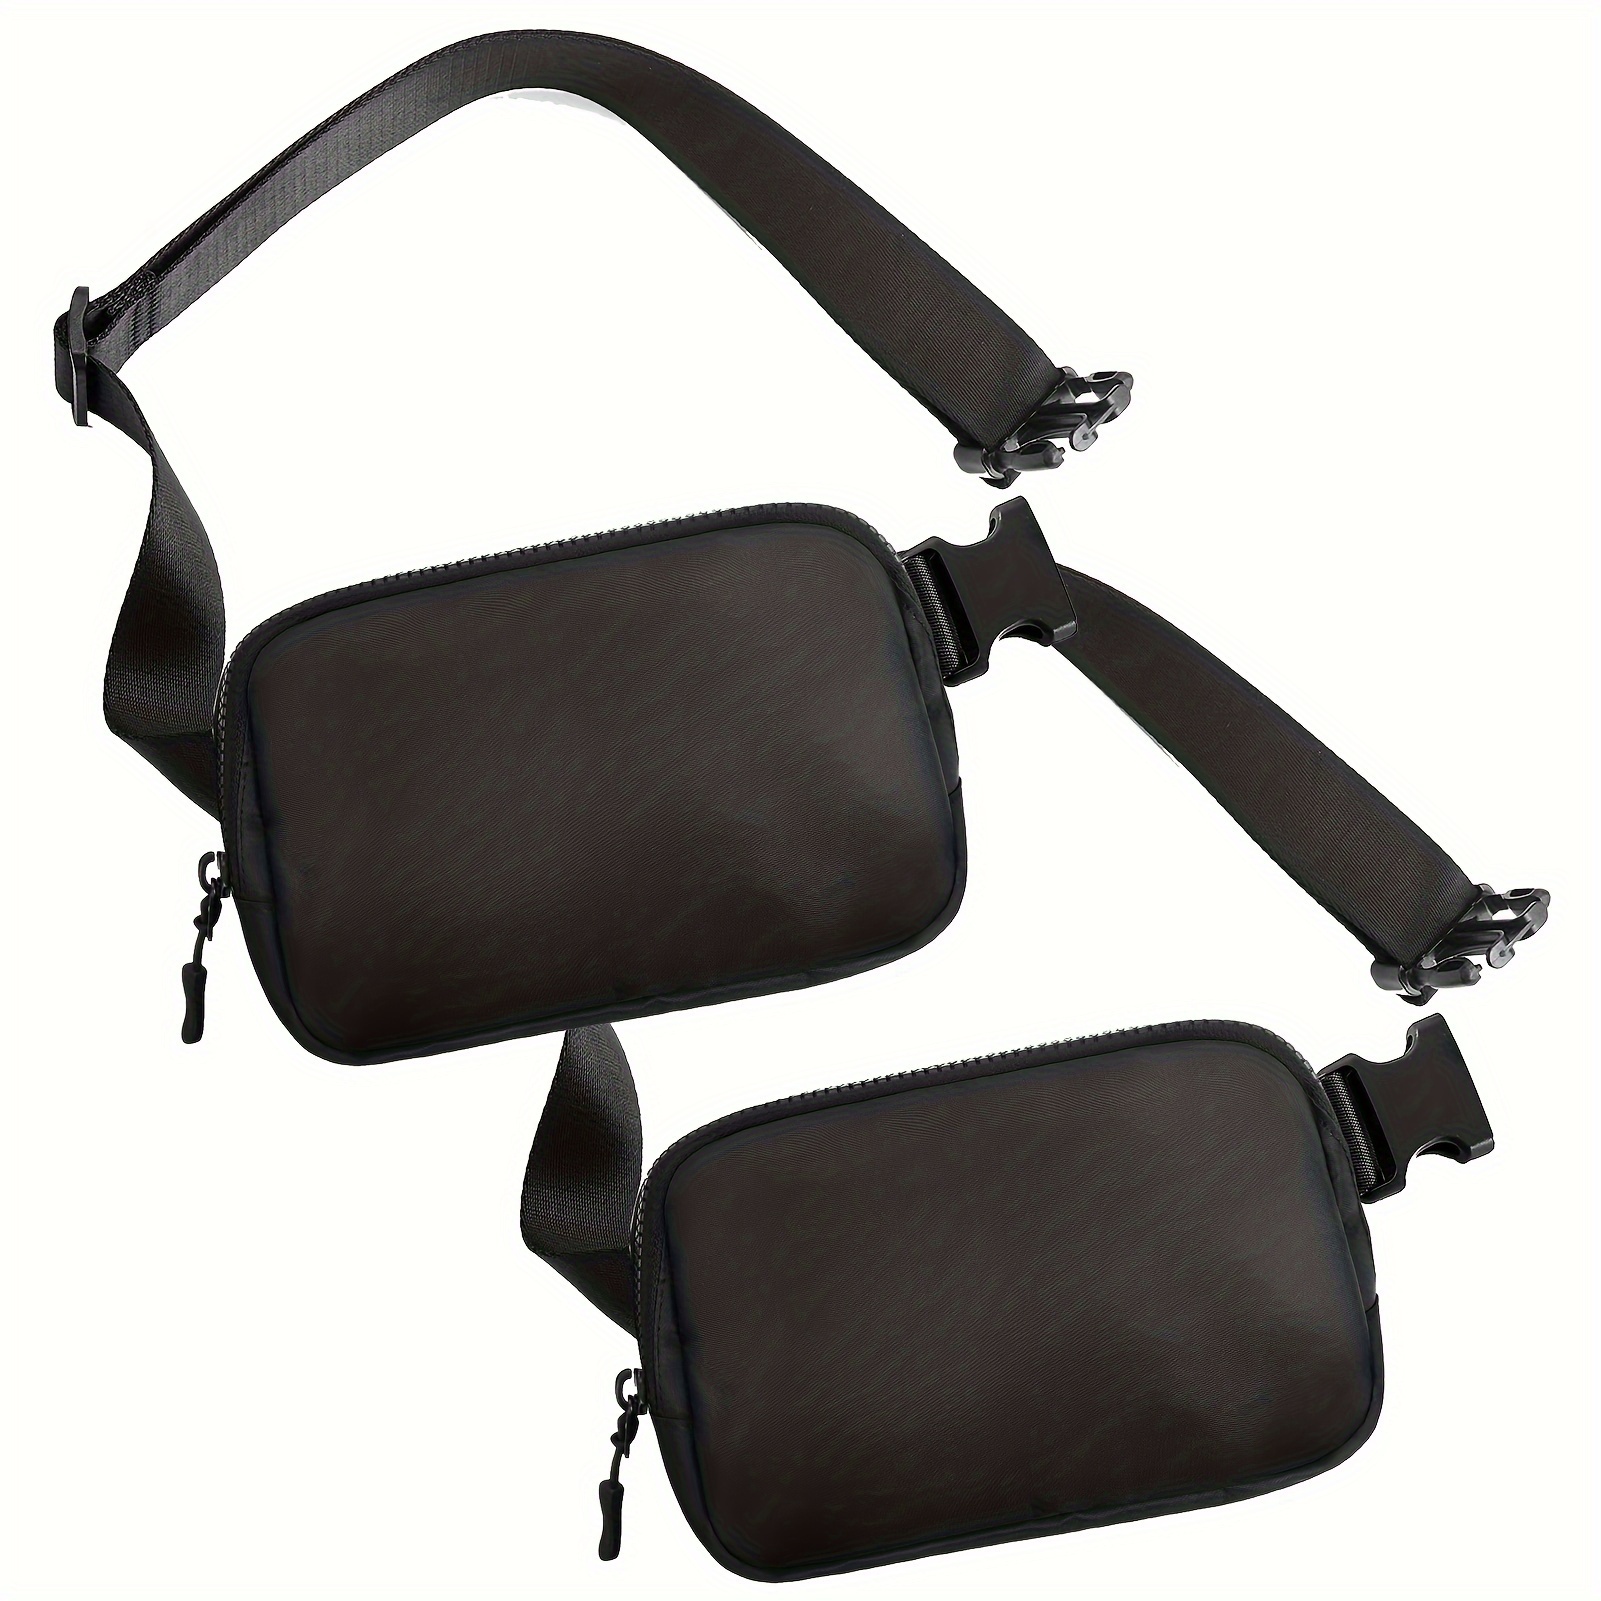 

2 Packs Belt Bag For Women, Fashionable Crossbody Fanny Pack, Waist Bag With Adjustable Strap